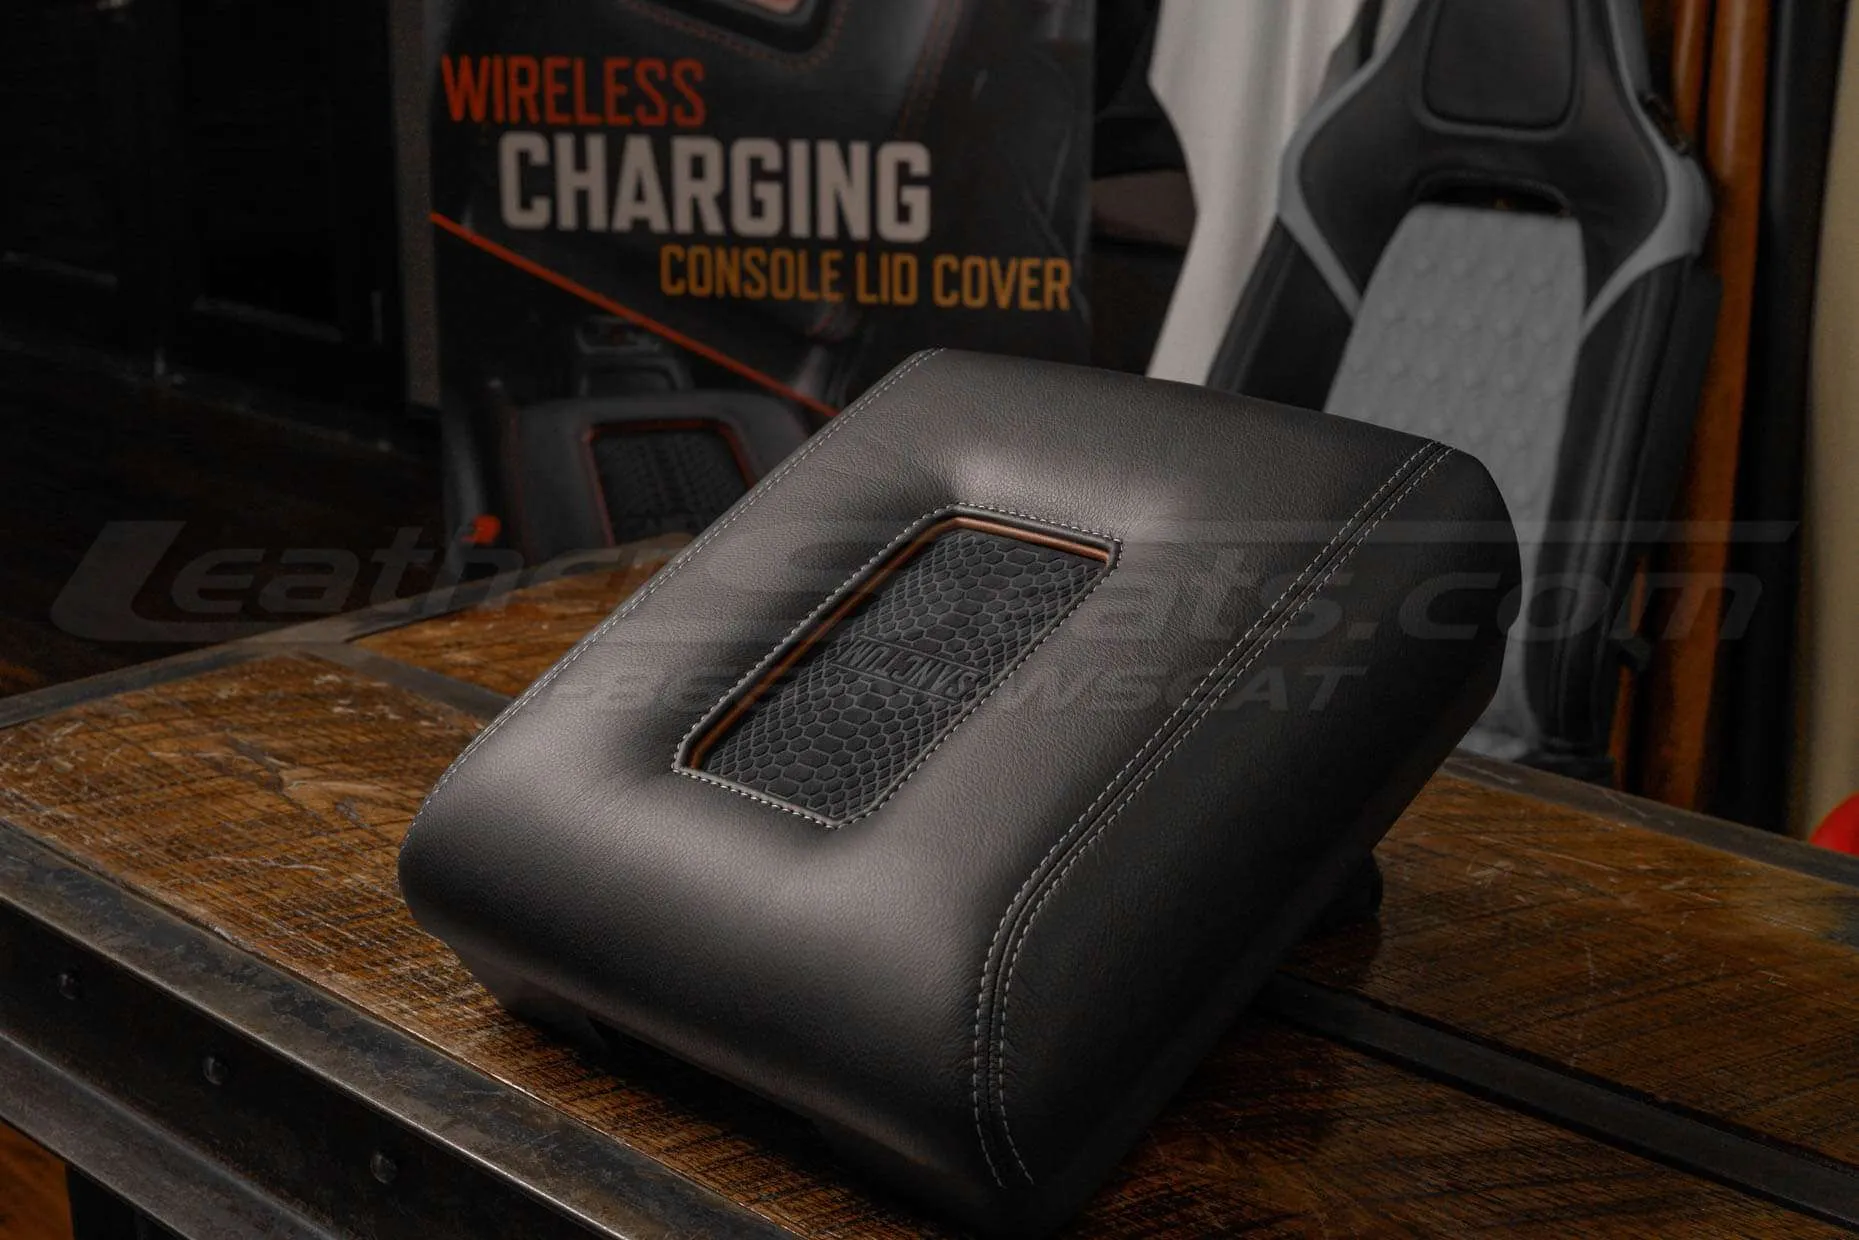 Sanctum Wireless Charging Console Lid Cover